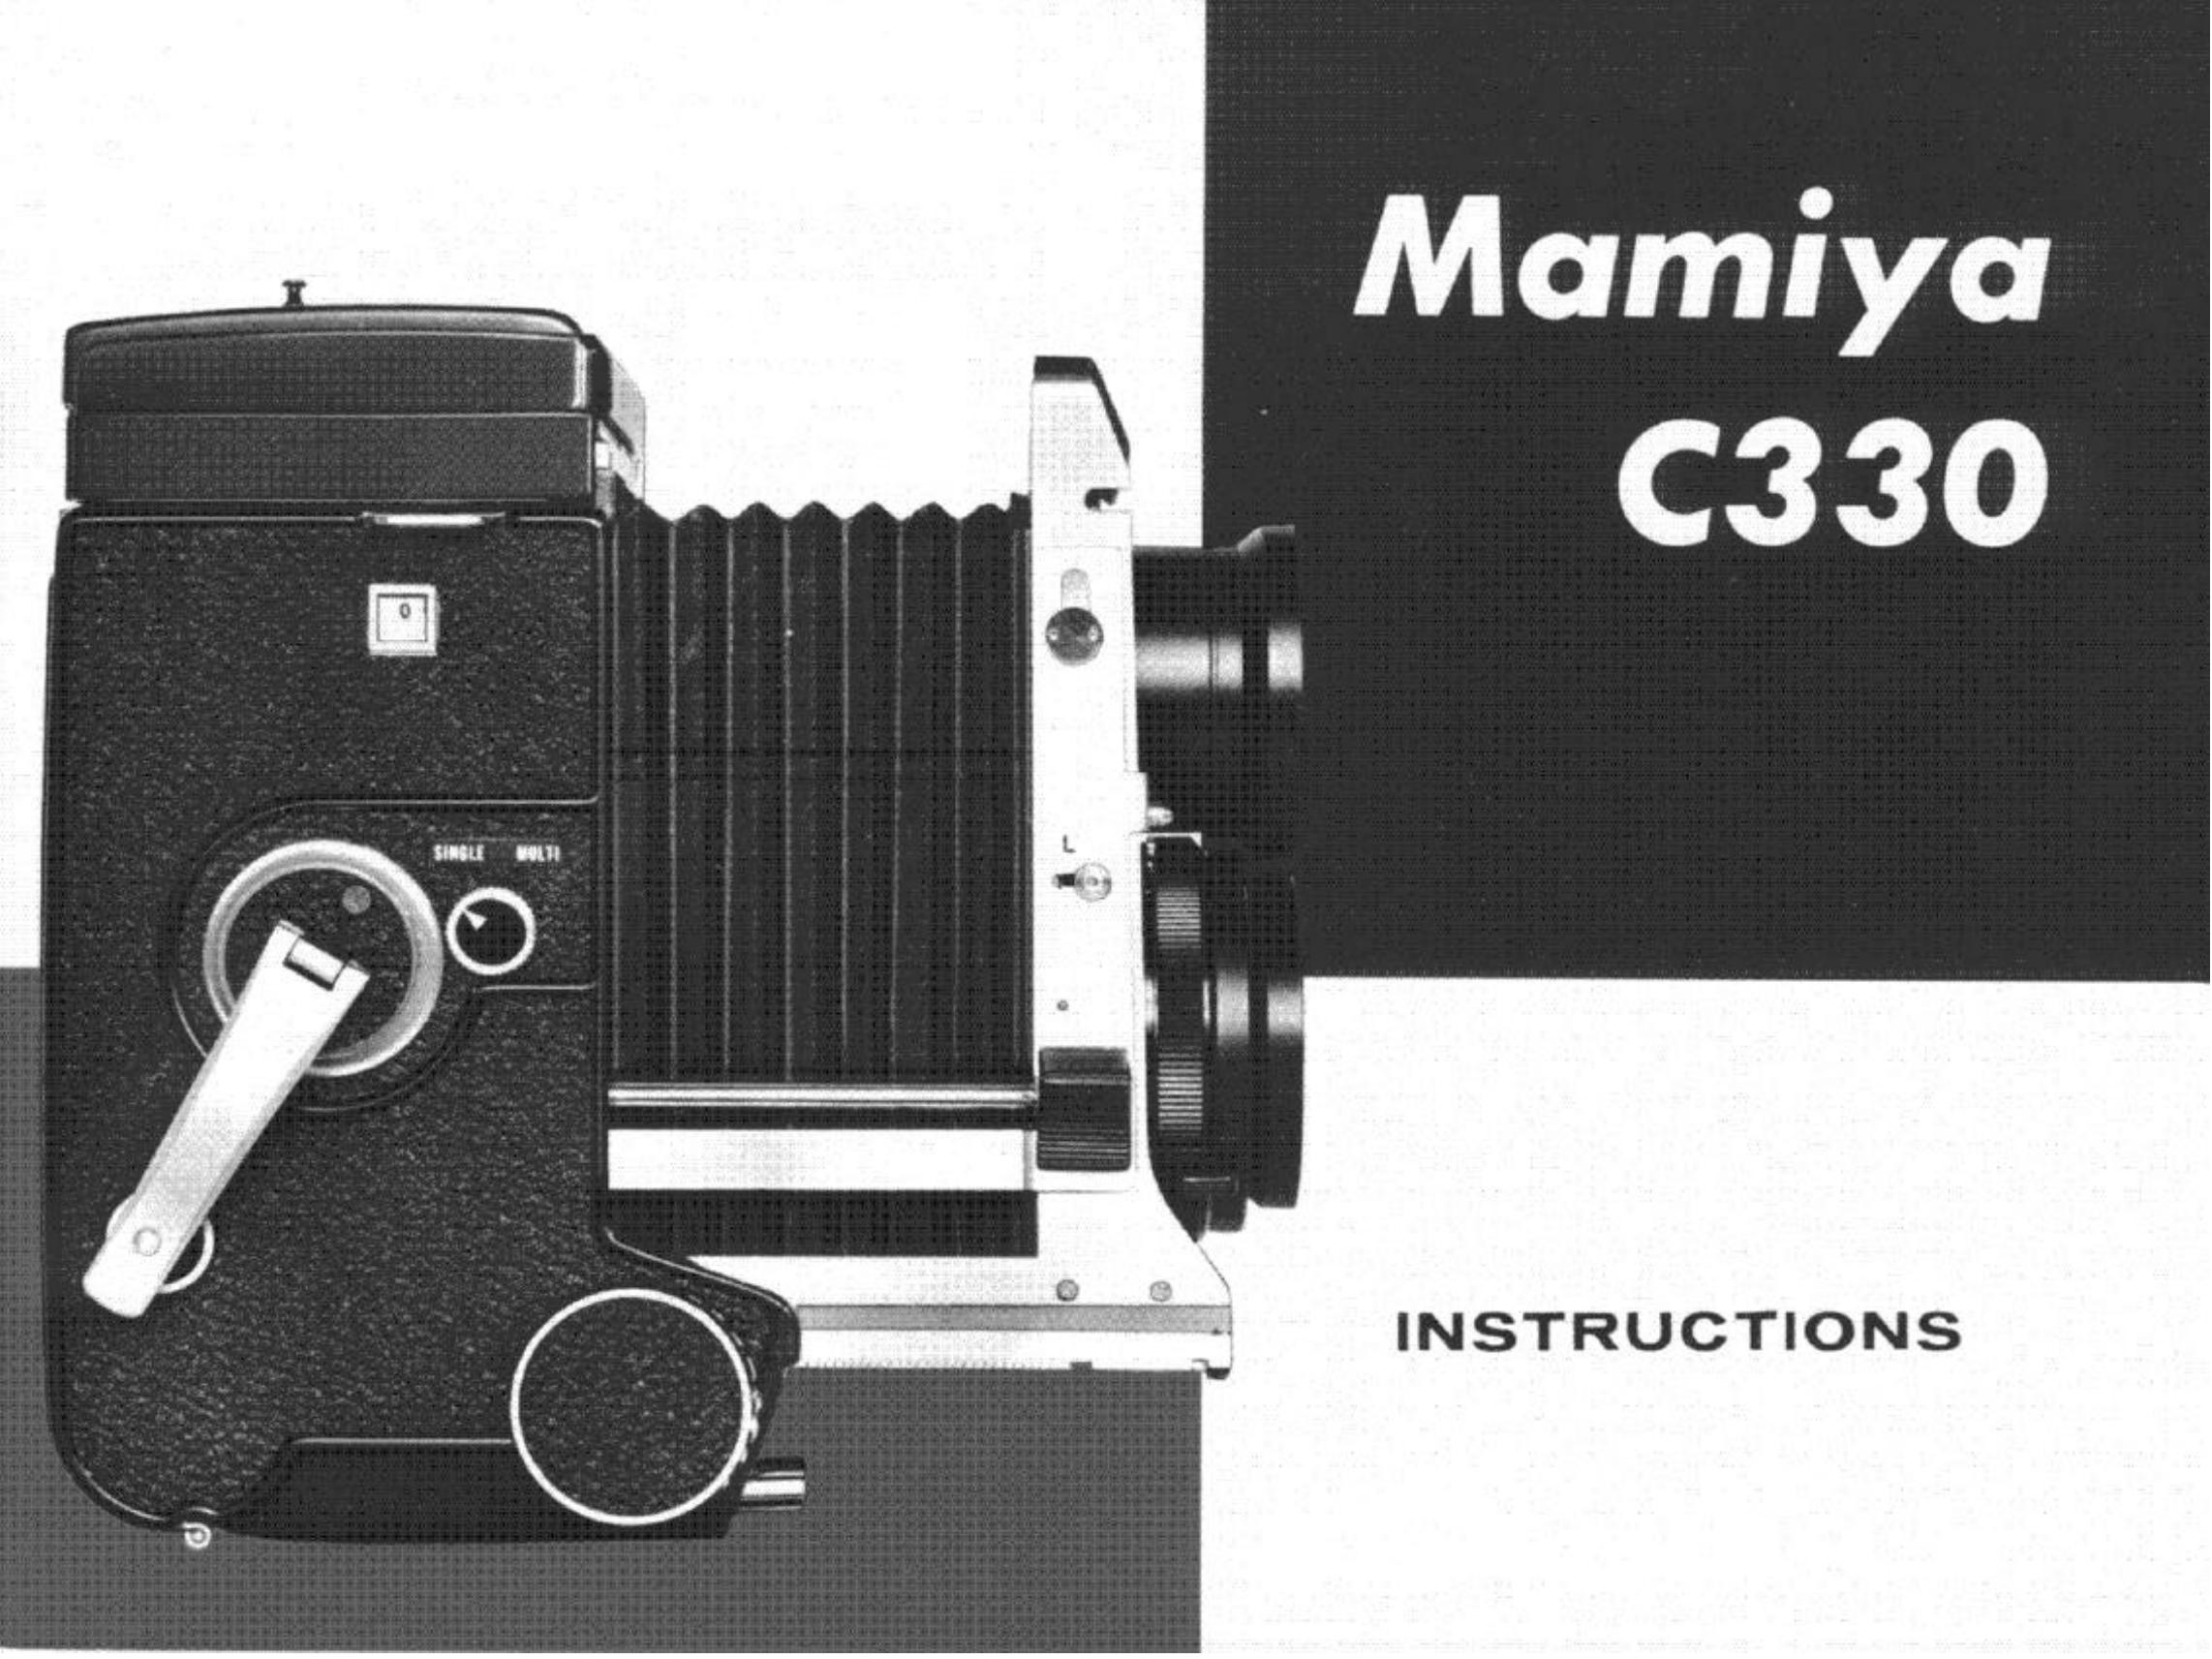 Mamiya C330 Digital Camera User Manual